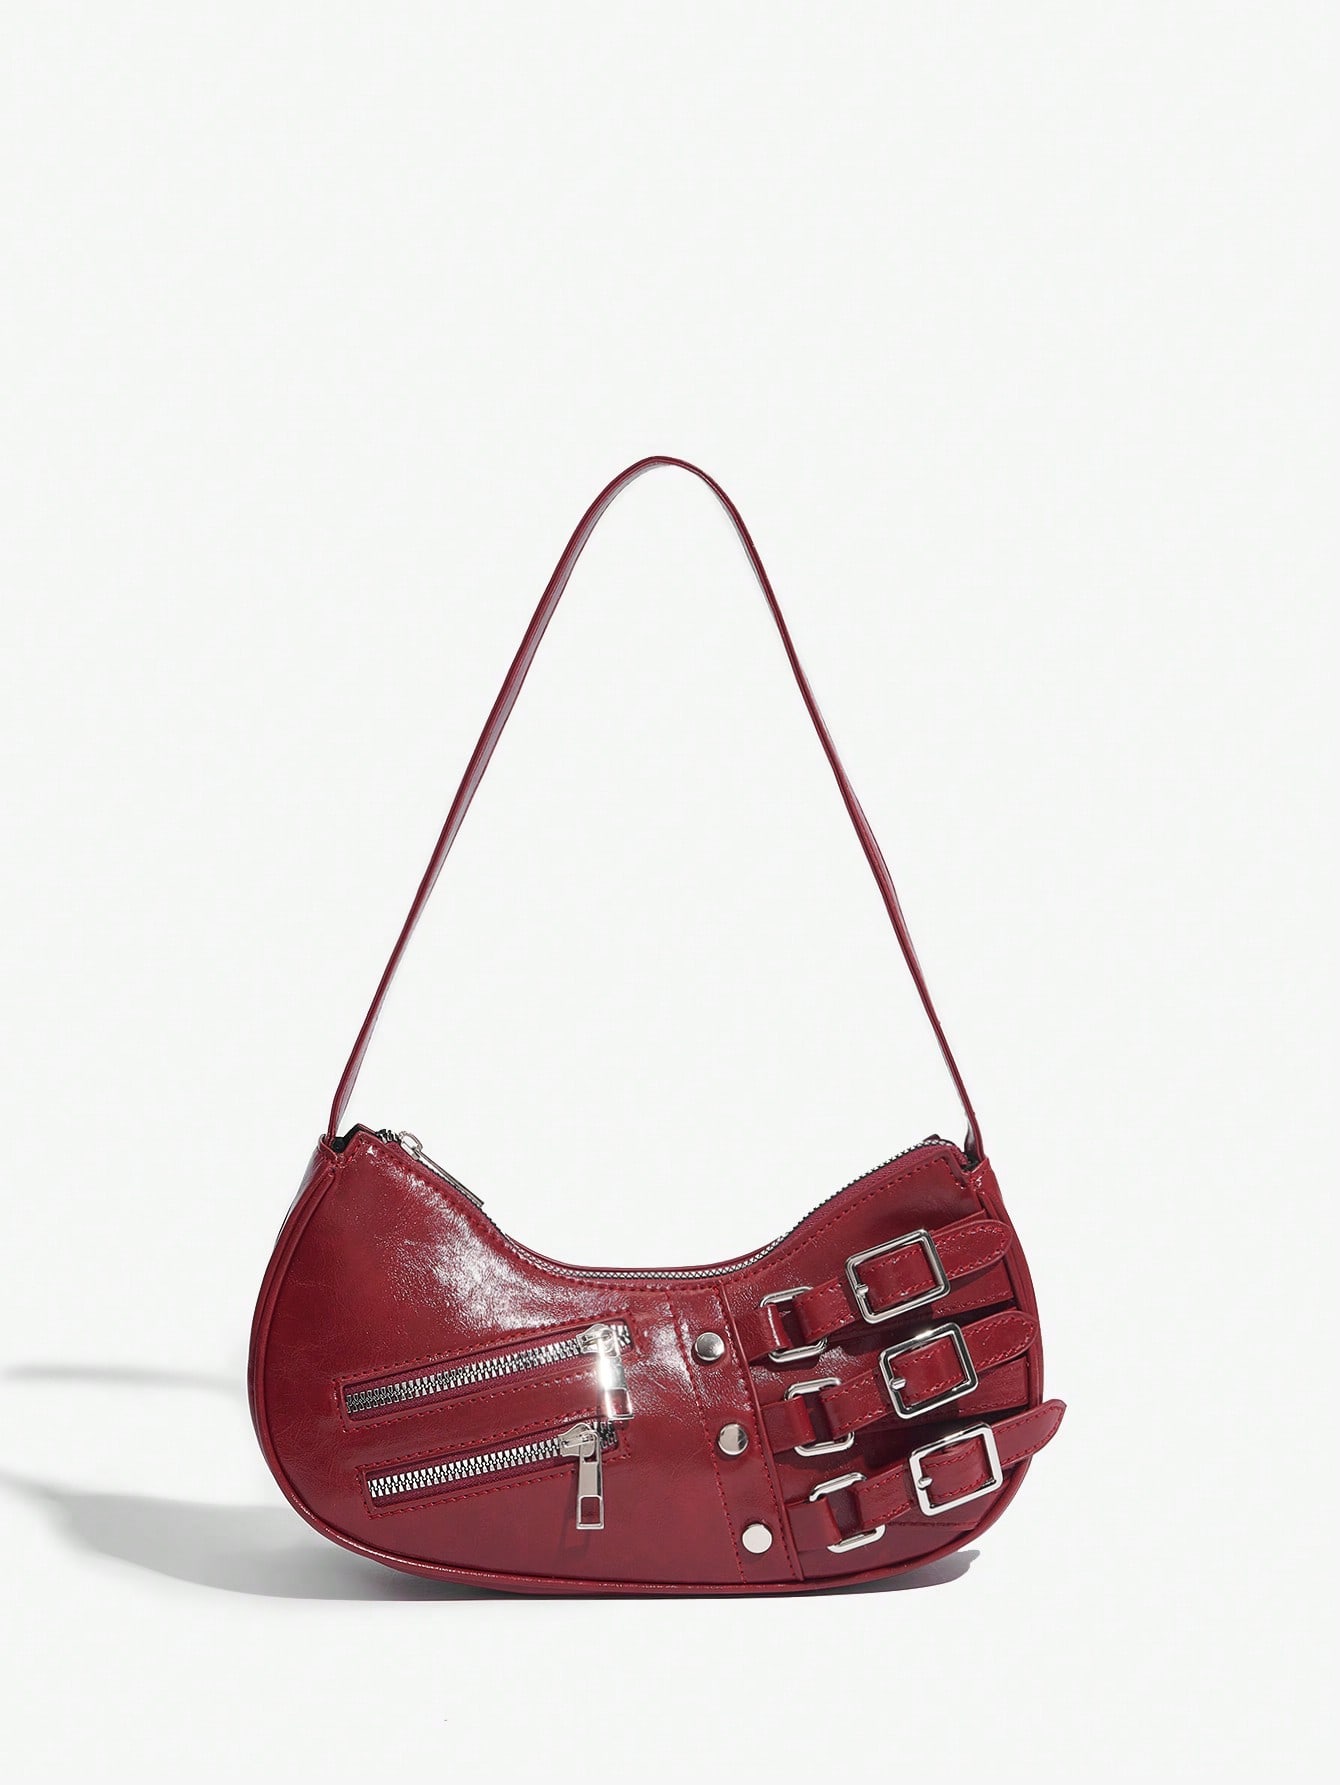 SHEIN ICON Street Style, бургундия shein icon женская модная винтажная красная сумка через плечо с заклепками многоцветный